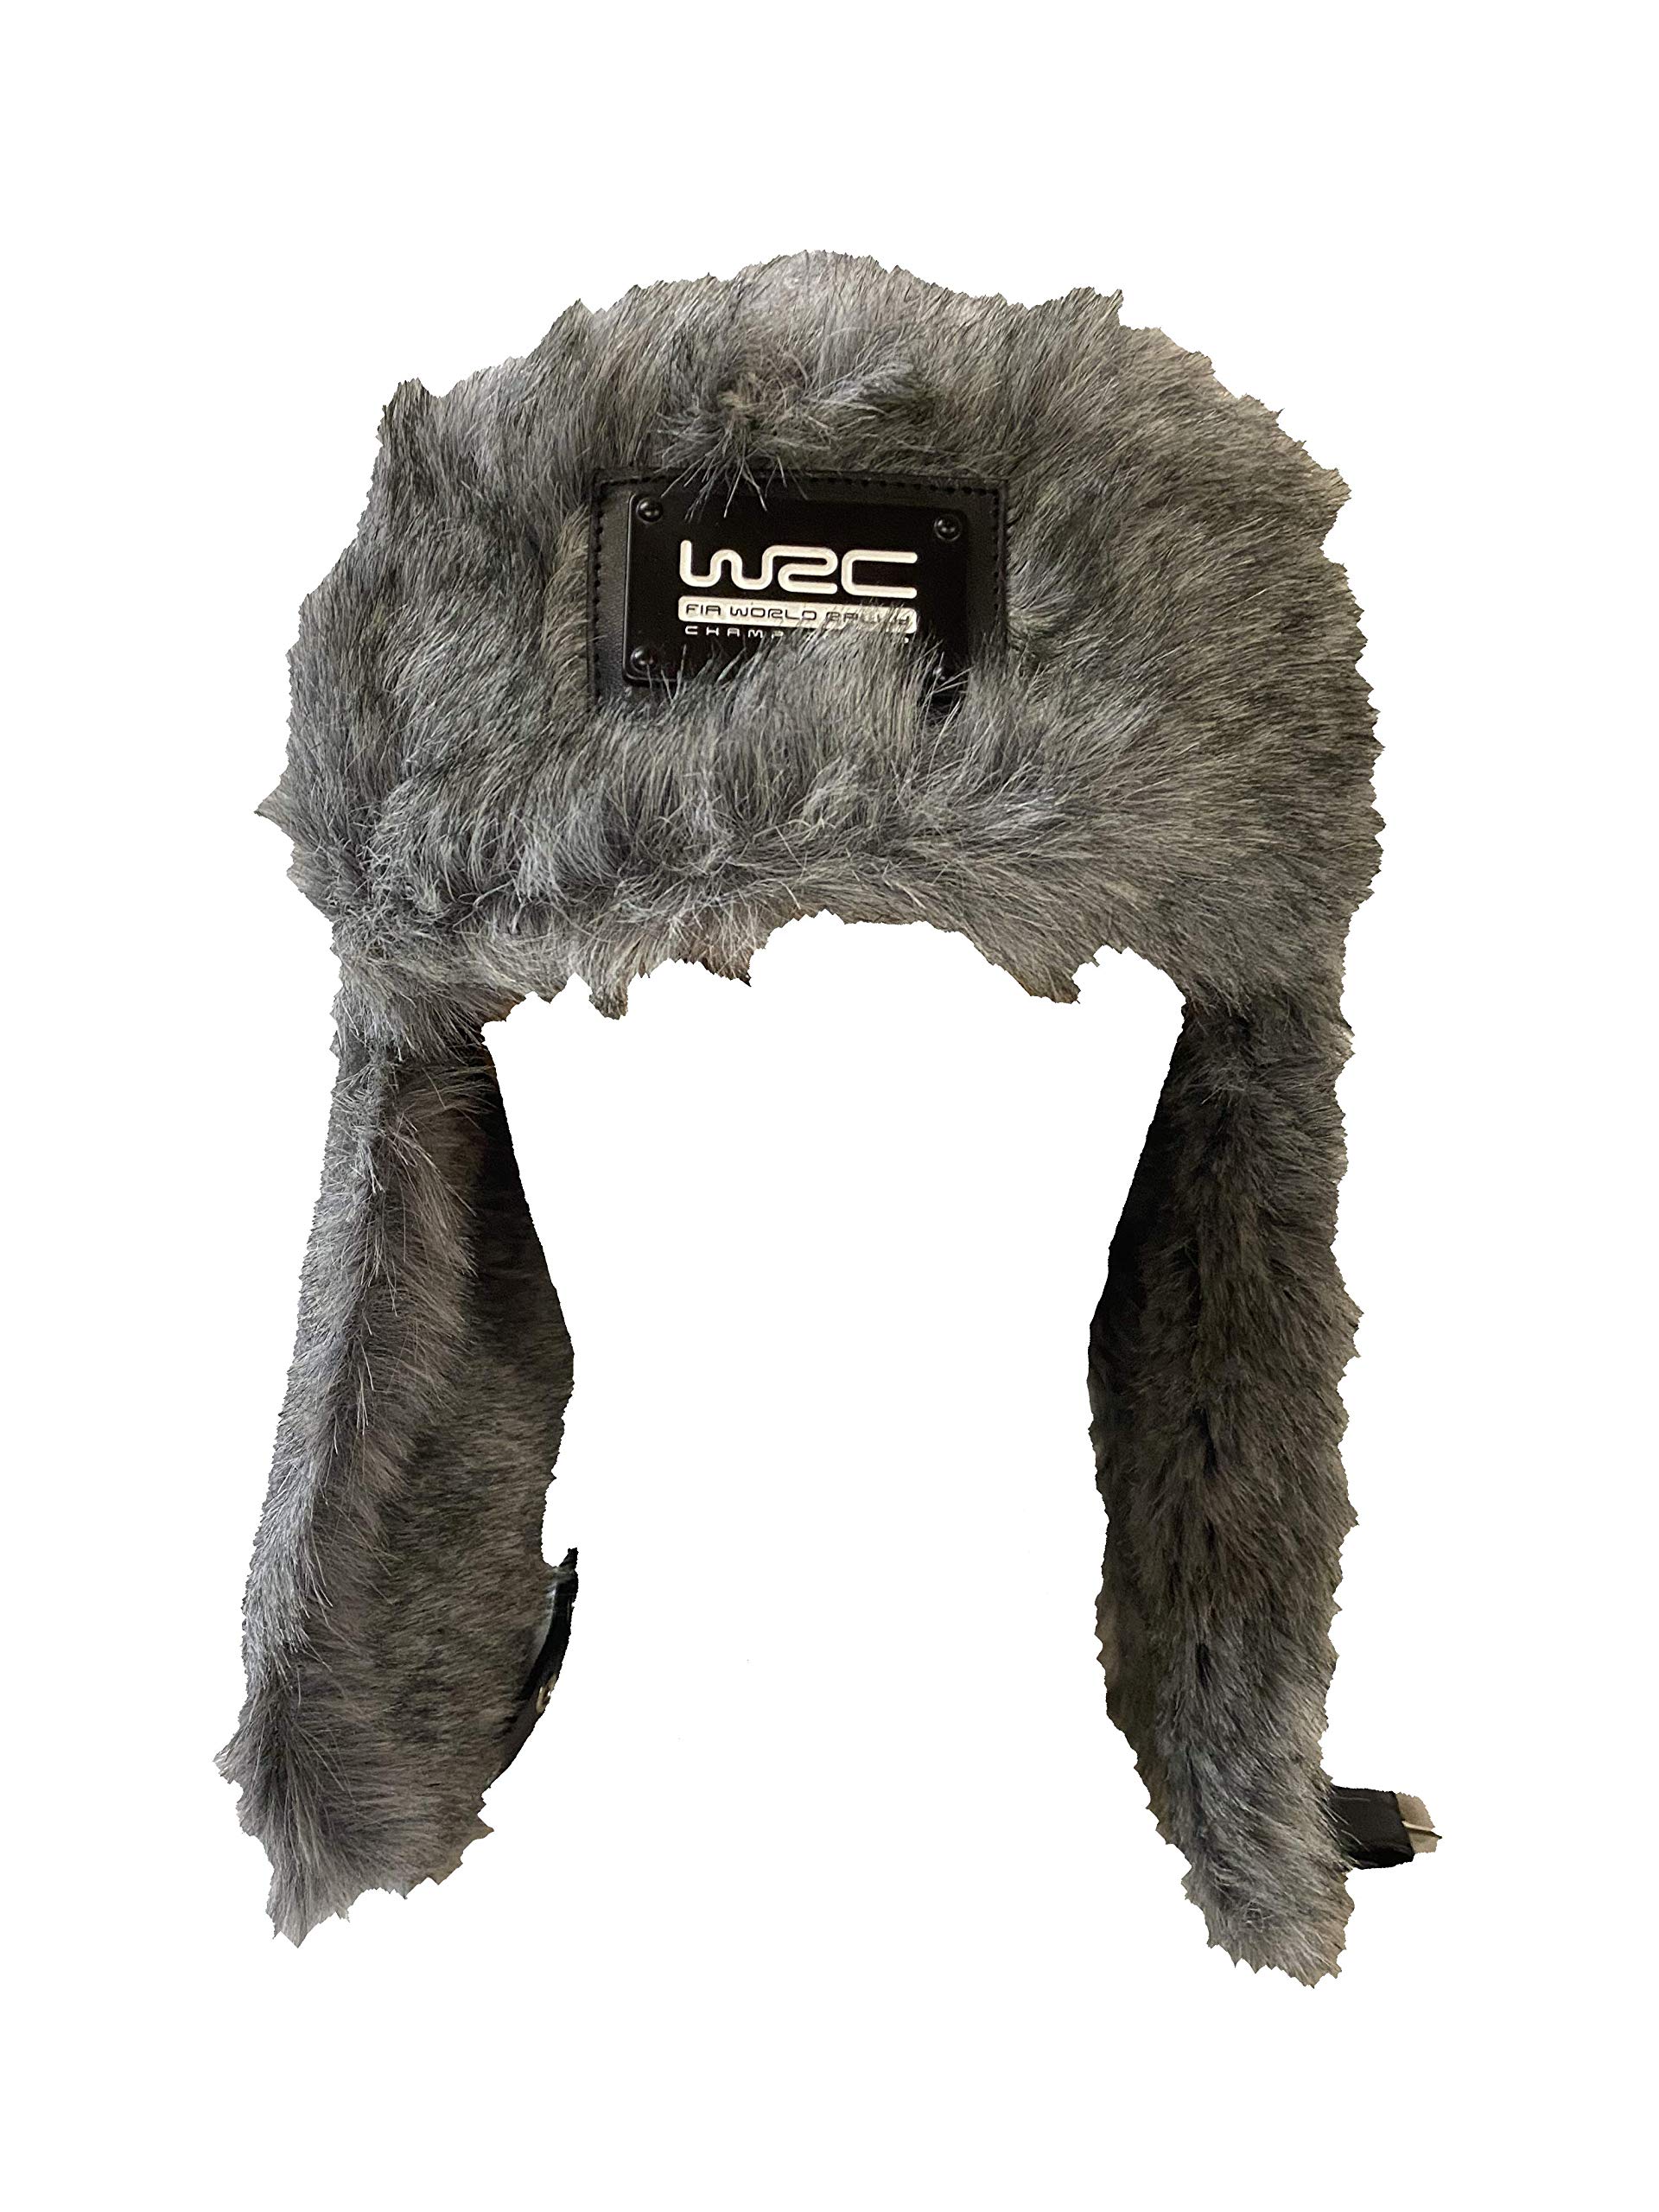 WRC Grey Fur Hat, Rallye Fell Wollmütze grau, Wintermütze